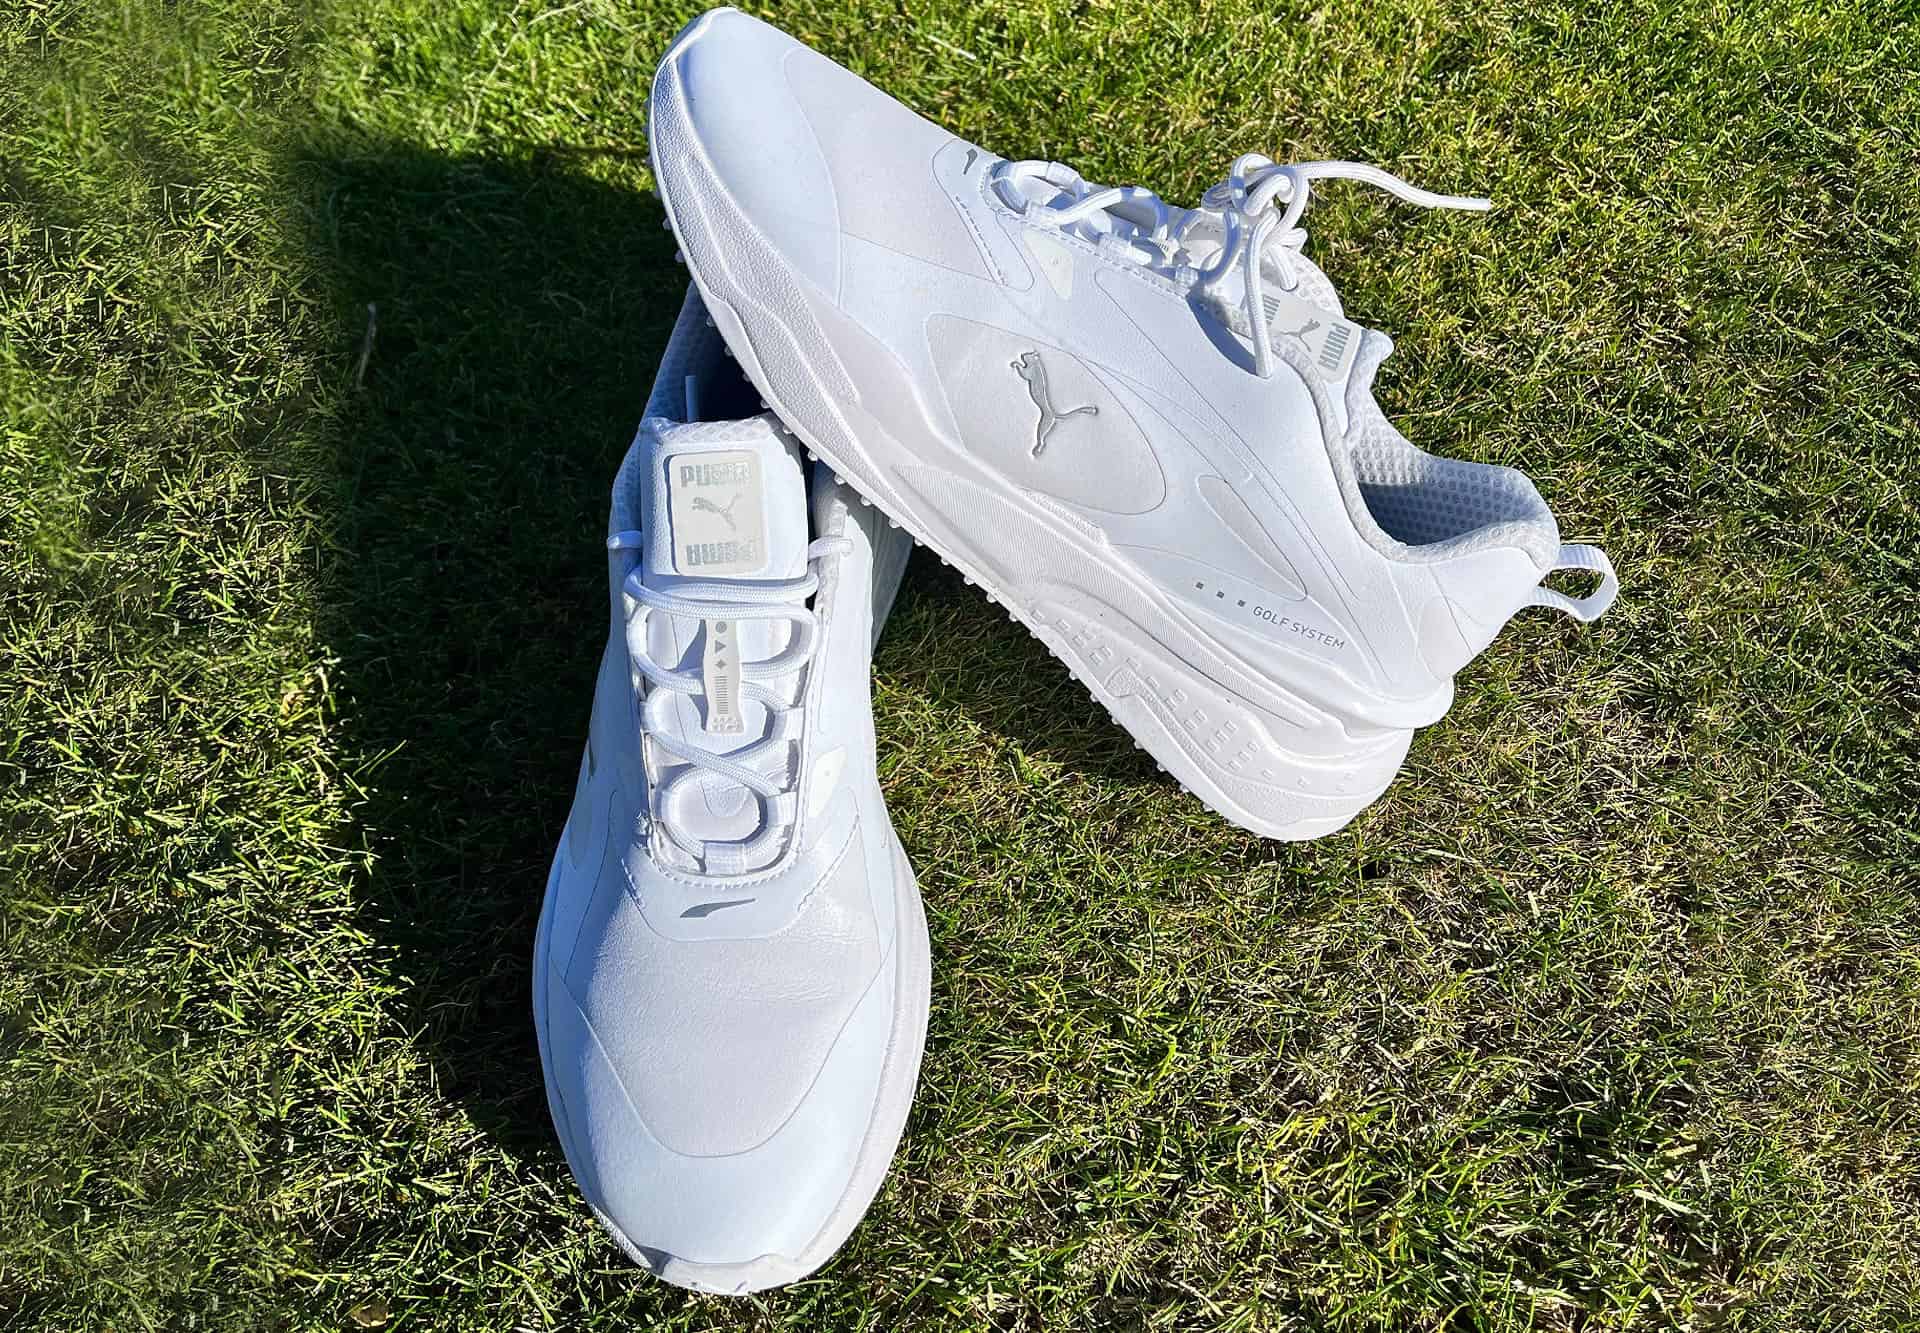 Puma GS-Fast golf shoes review